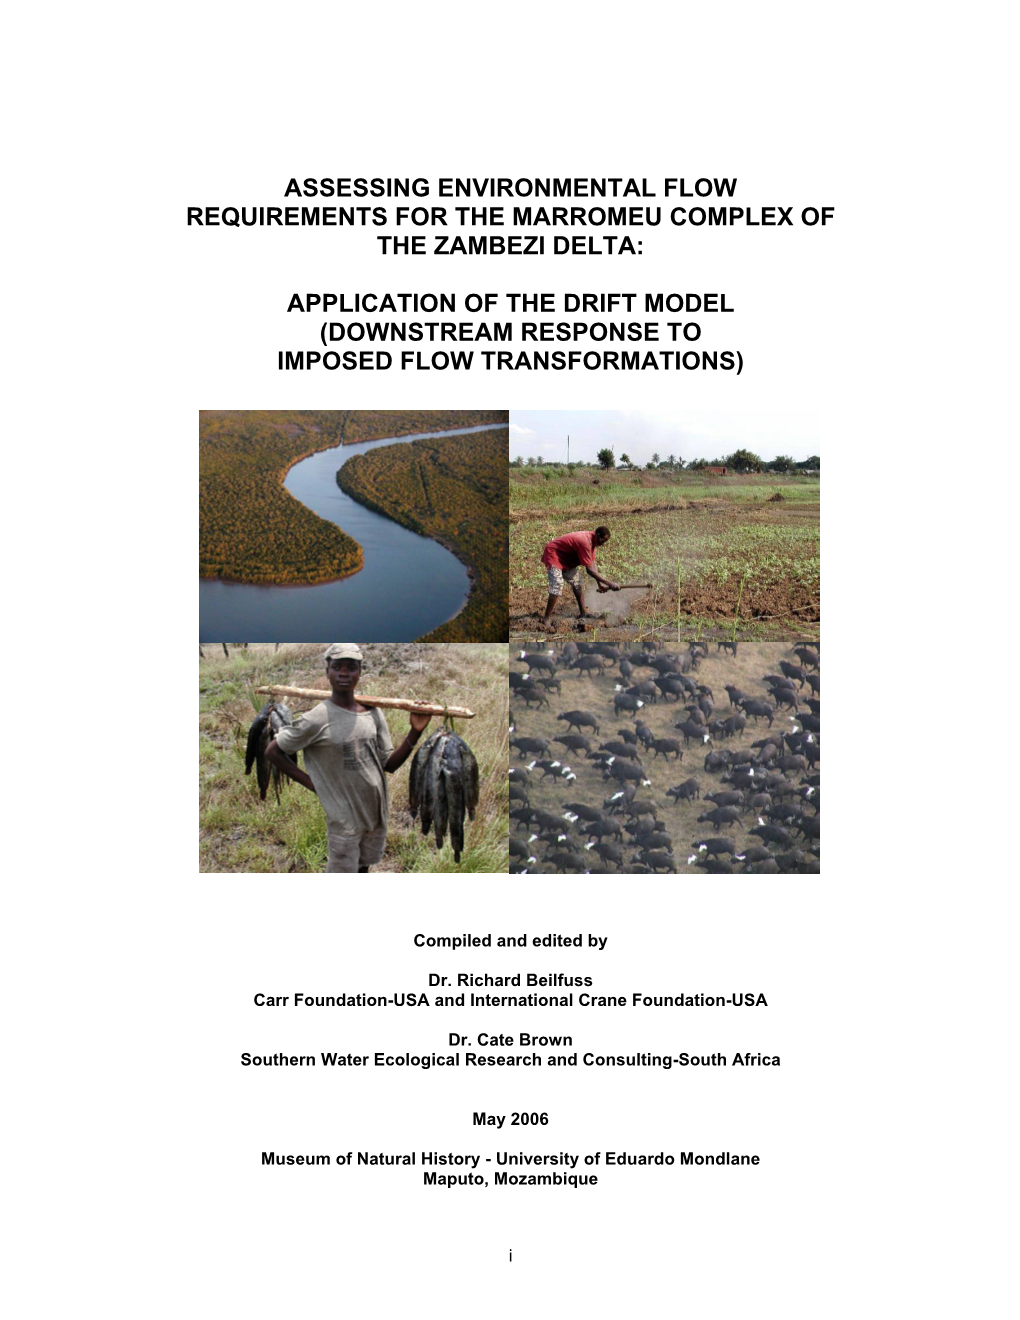 Assessing Environmental Flow Requirements for the Marromeu Complex of the Zambezi Delta